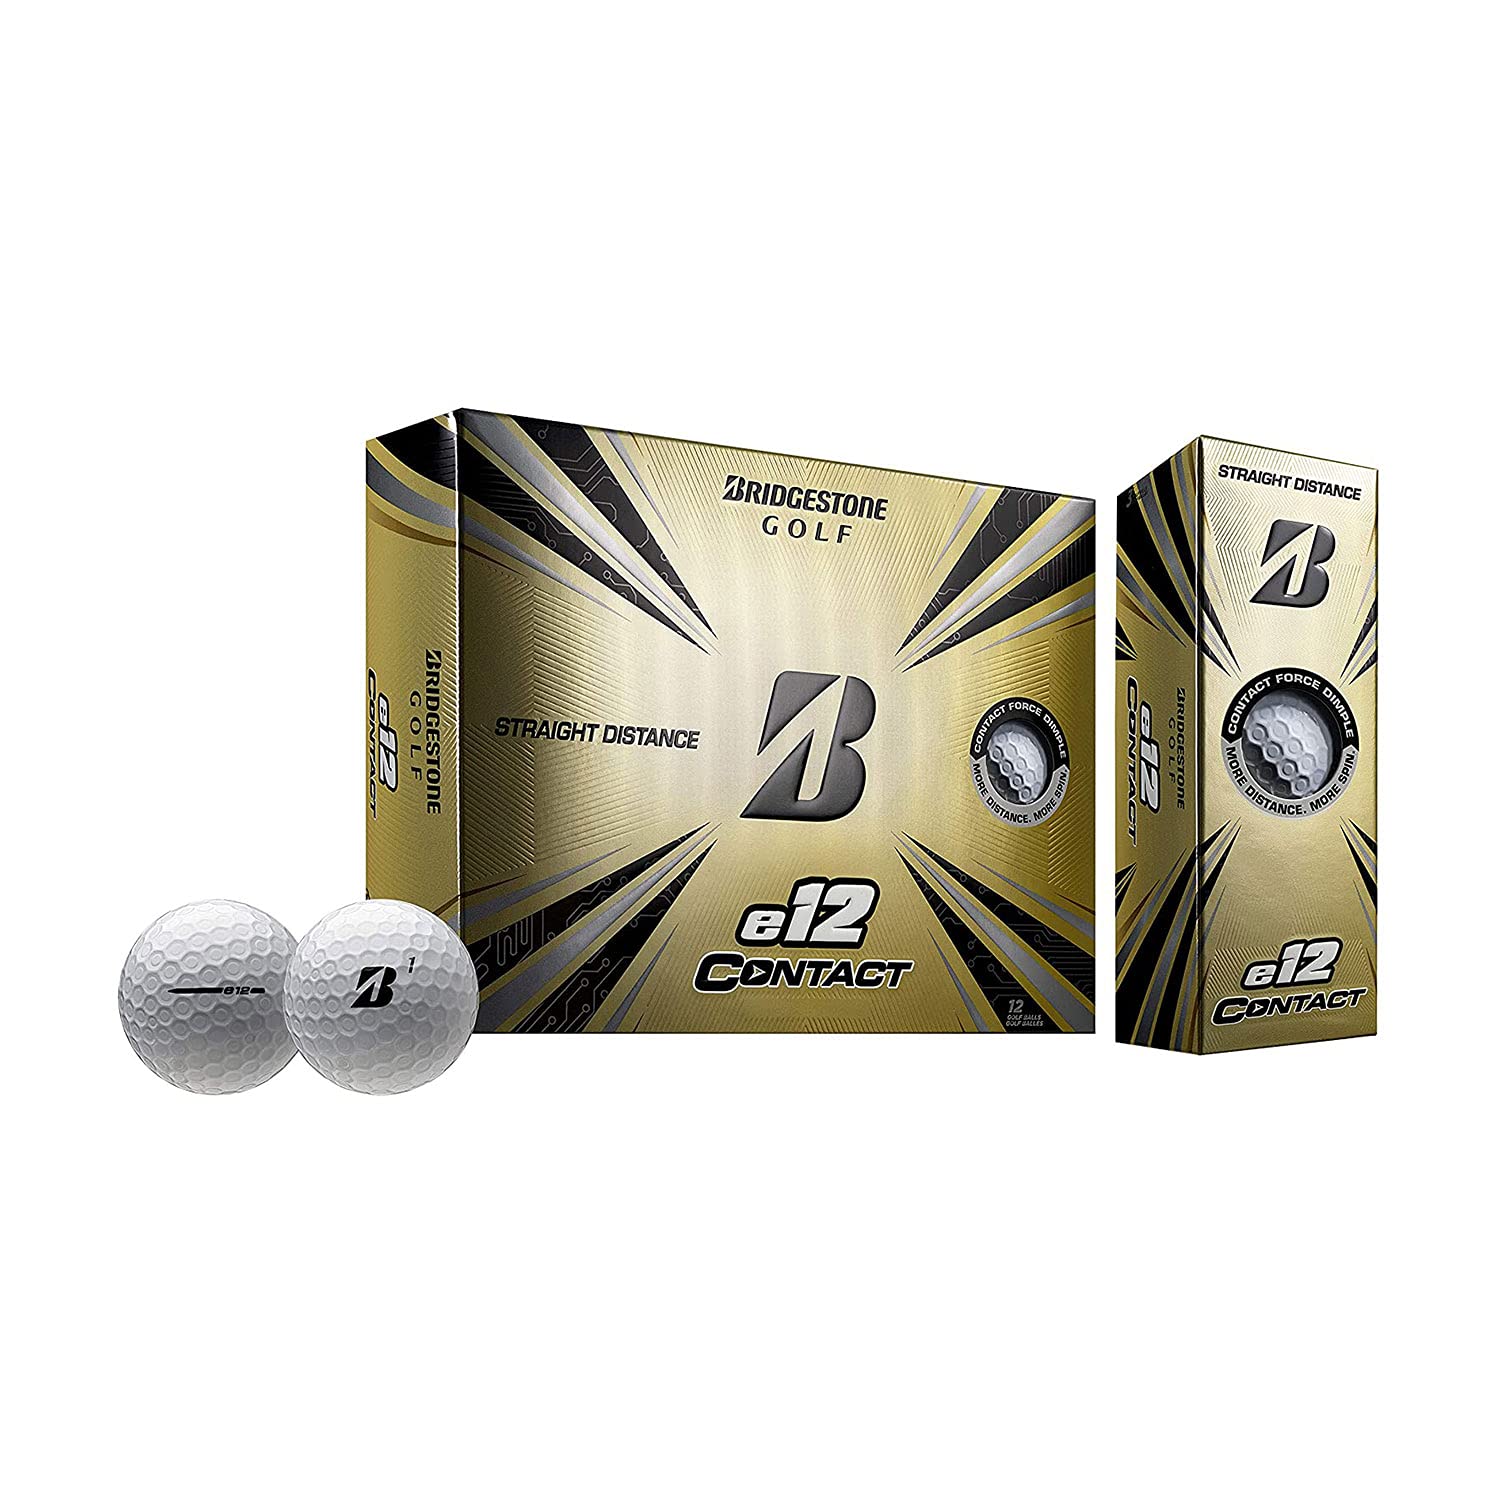 Bridgestone Golf 2021 e12 Contact Golf Balls